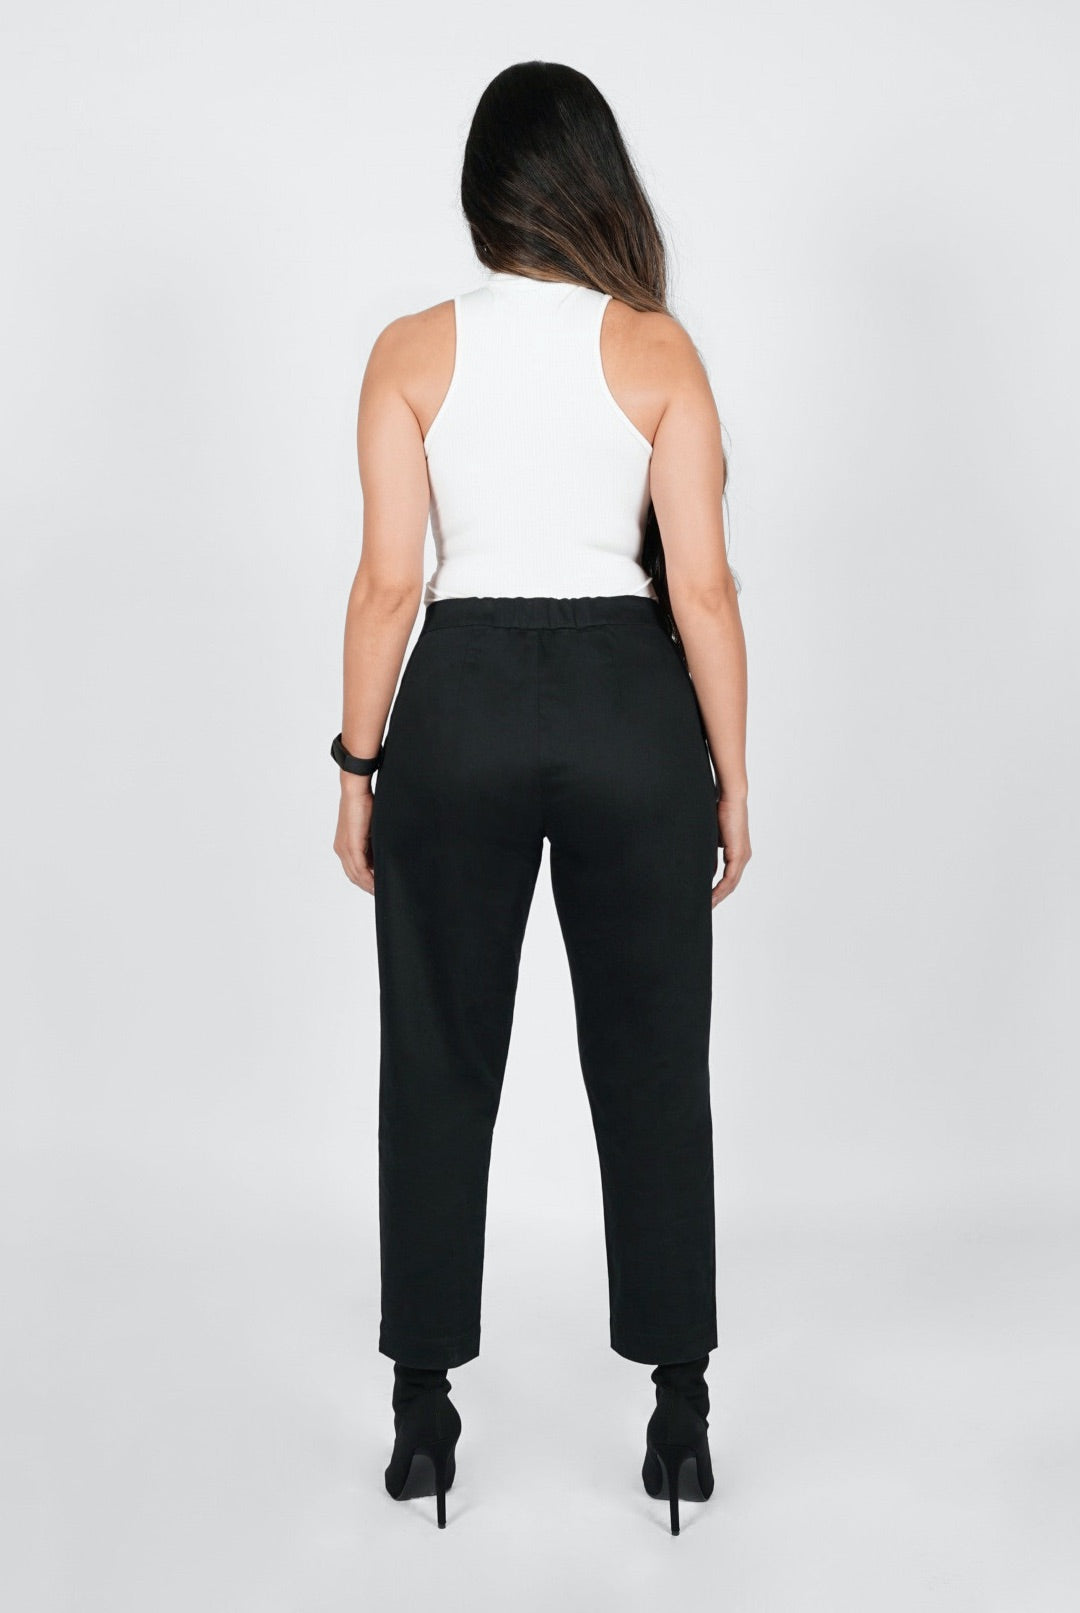 ZKCCNUK Summer Plus Size Capris for Women Plus Size Women's Cotton Linen  Loose Drawstring Belt Casual Wide Leg Pants Trousers for Women on Clearance  - Walmart.com